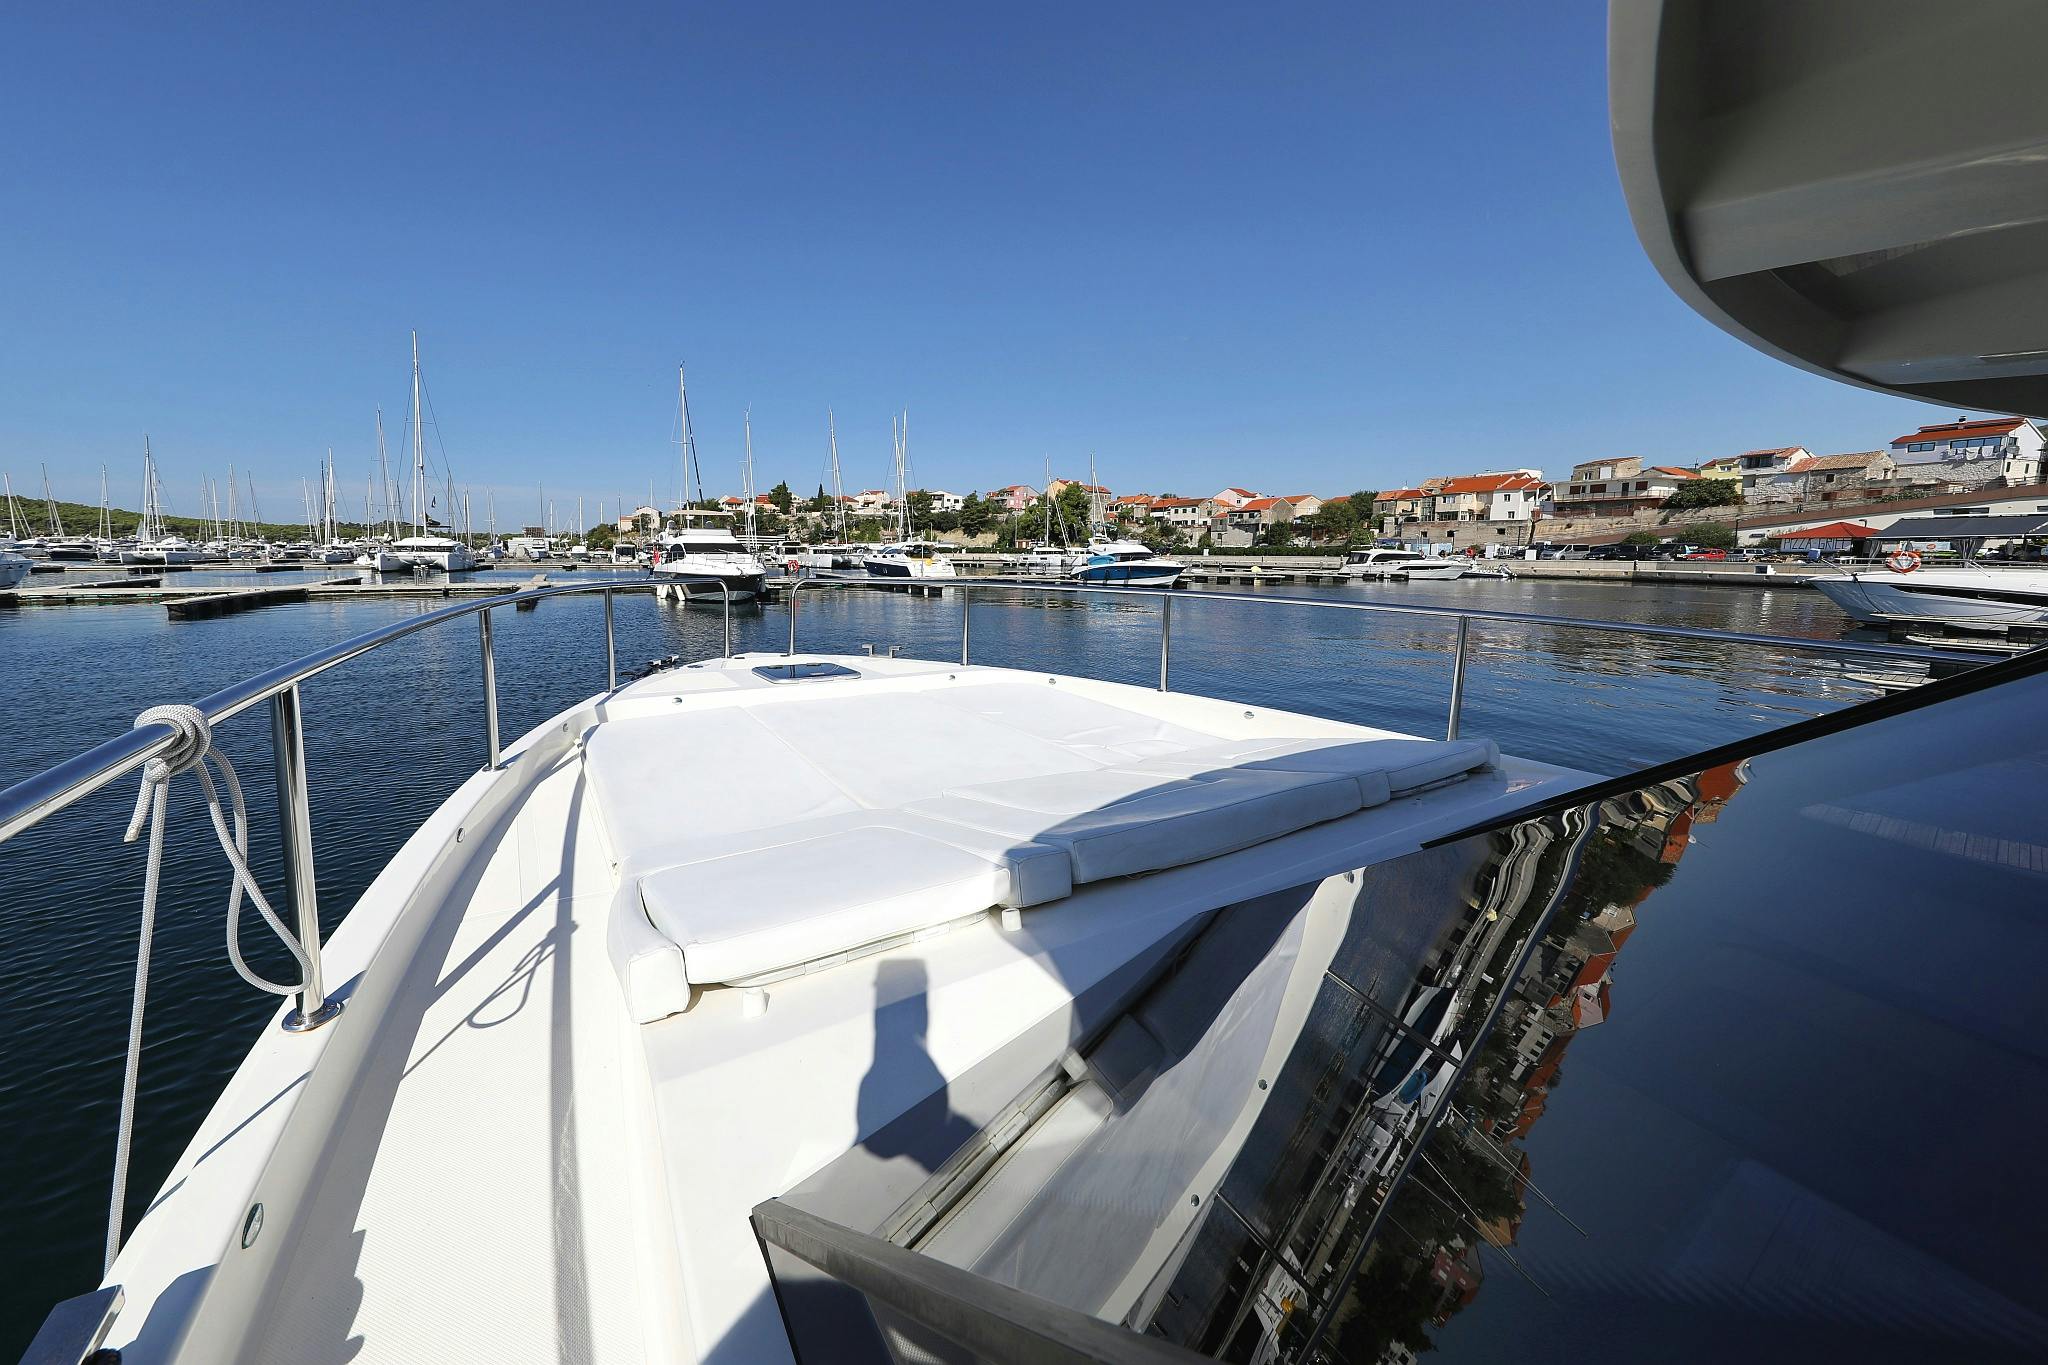 Book Futura 40 Grand Horizon Motor yacht for bareboat charter in Marina Mandalina, Sibenik, Šibenik region, Croatia with TripYacht!, picture 12